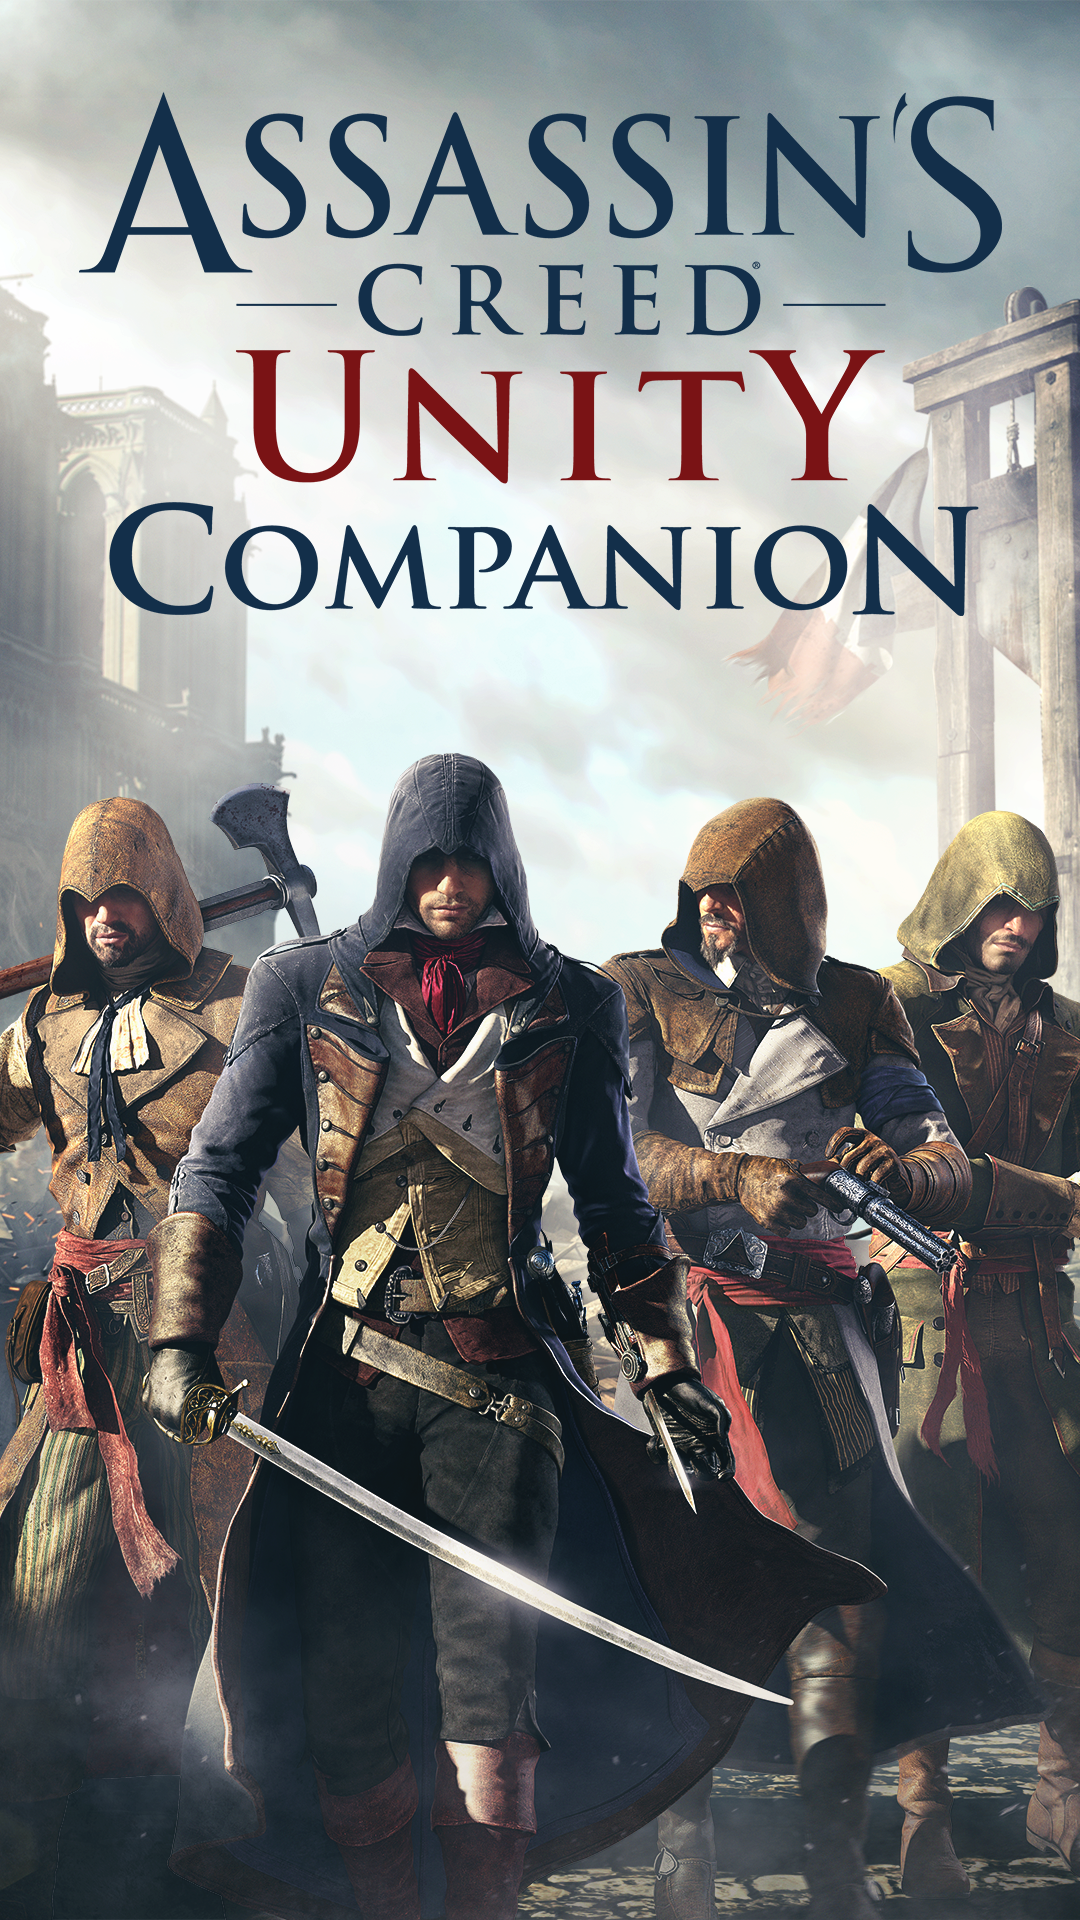 assassins creed unity companion